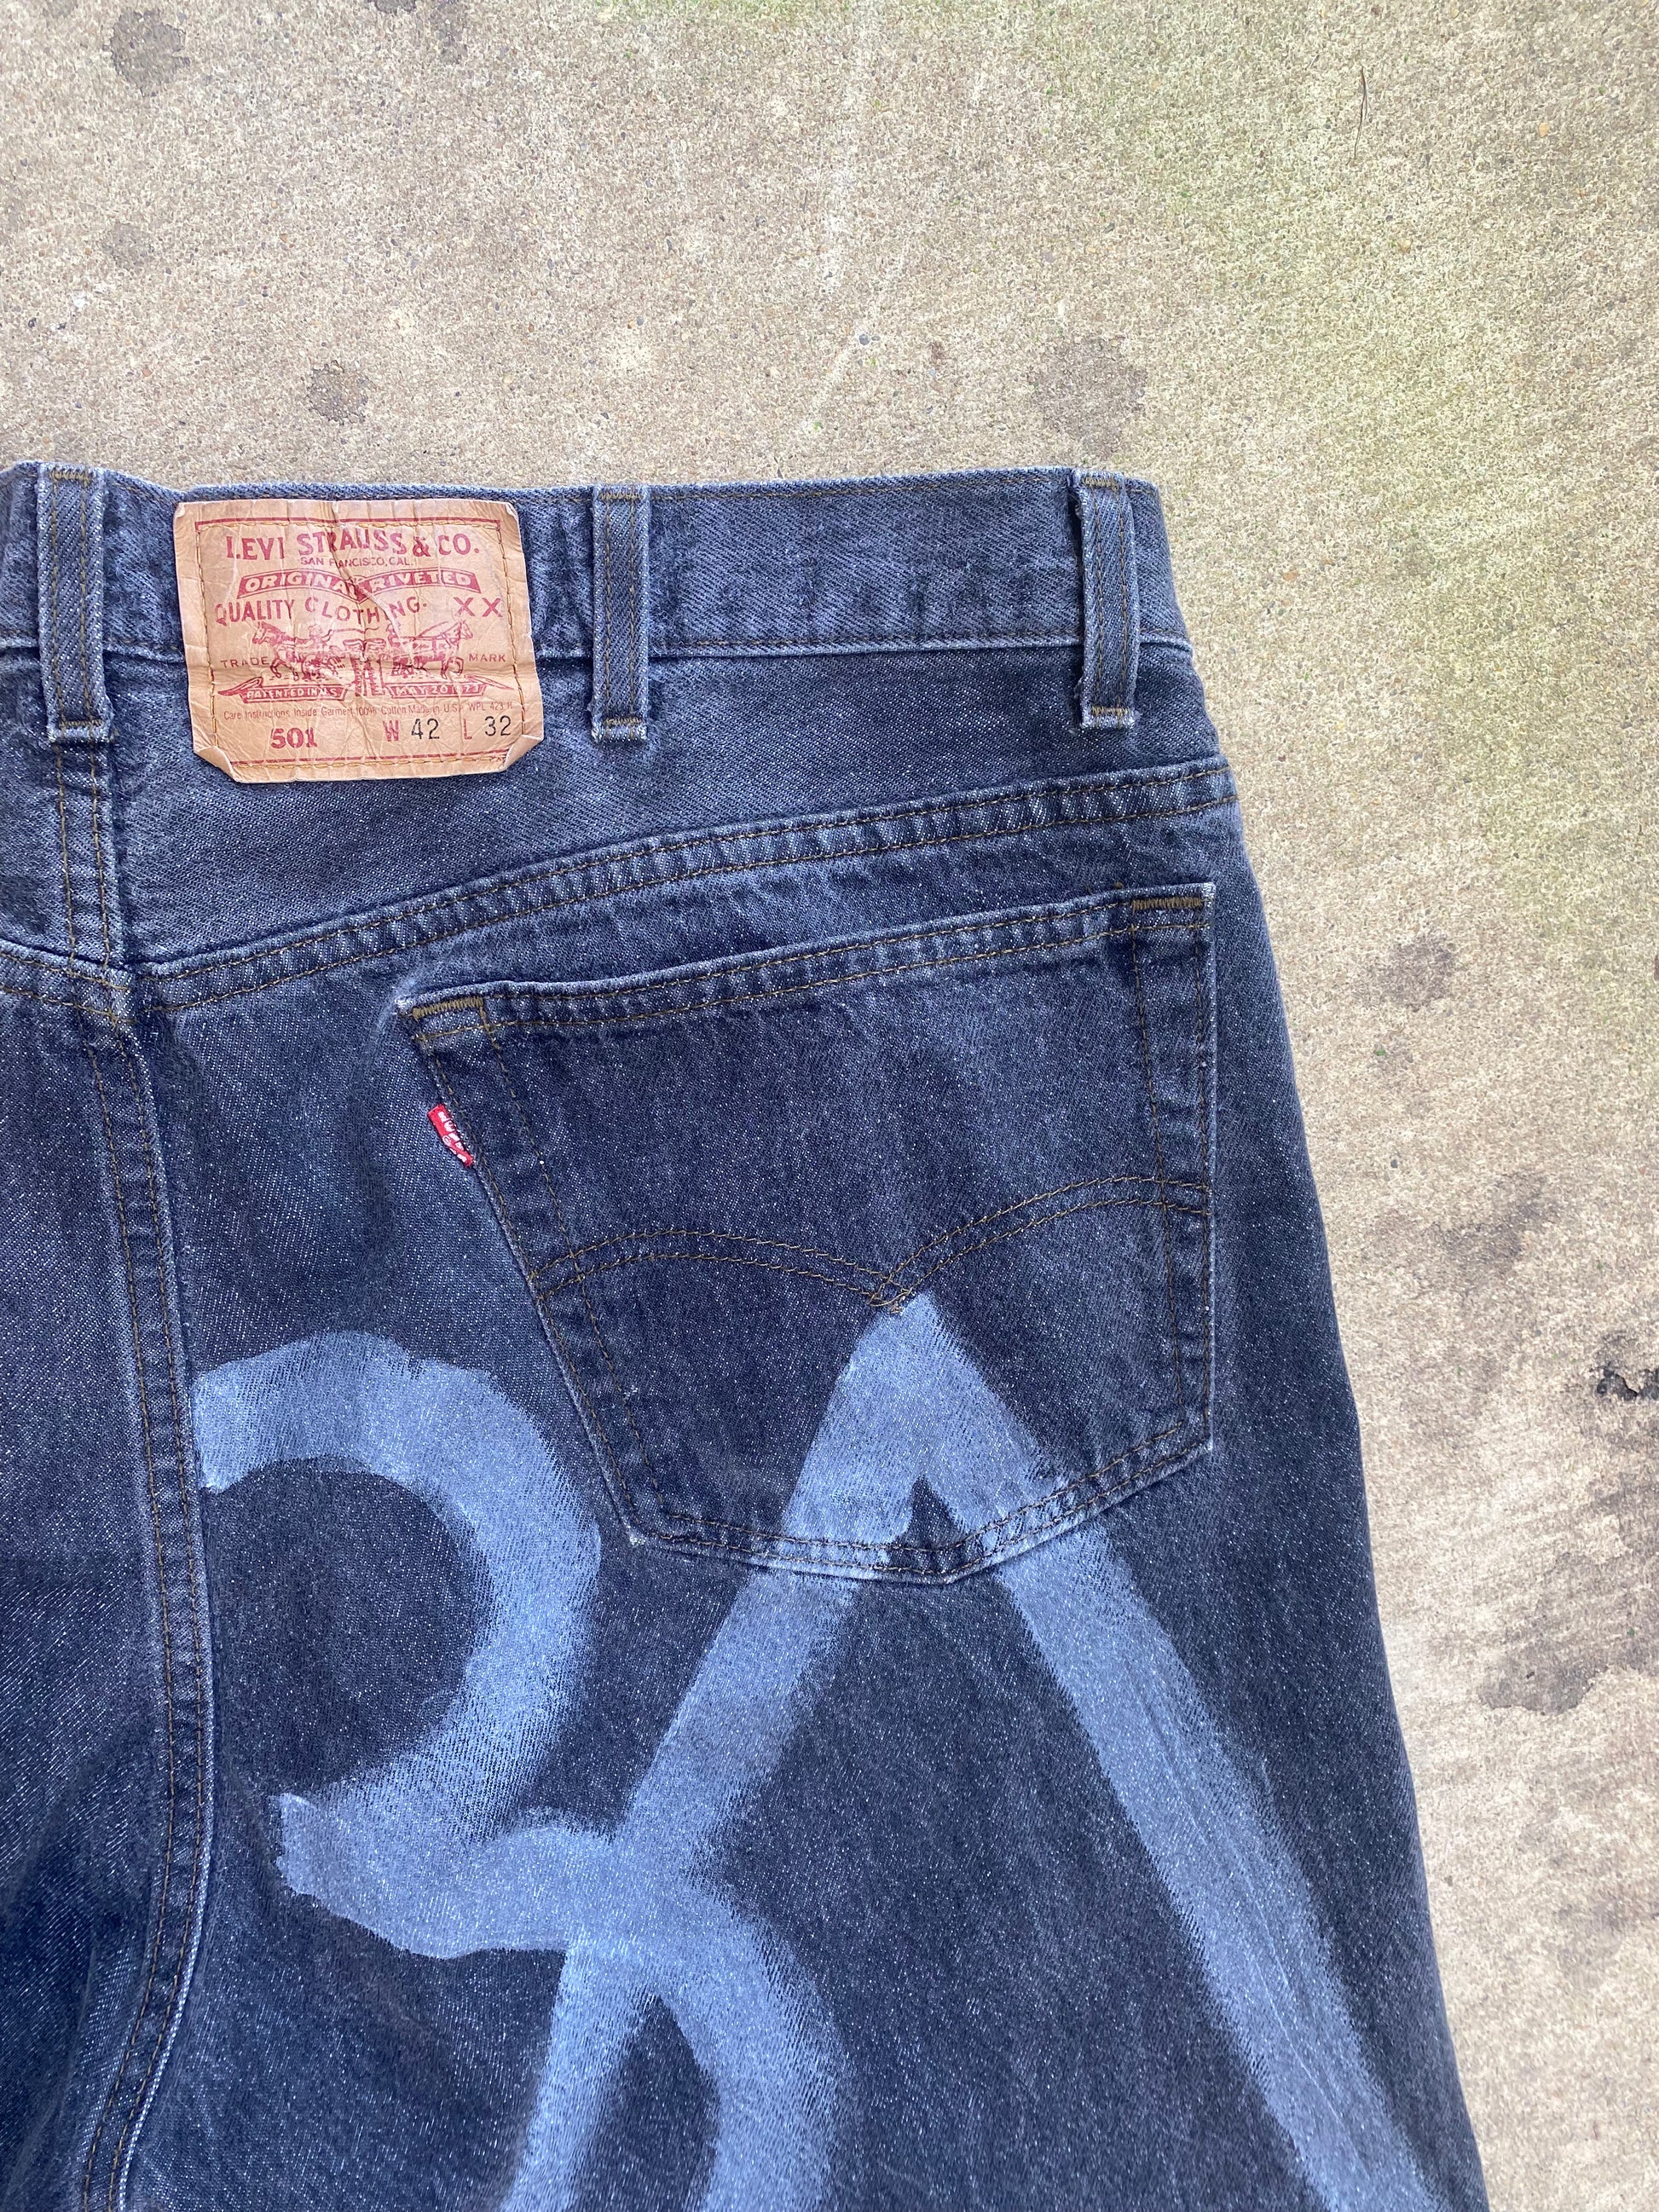 BAWR Levi’s 501xx Black Yin Jeans - Brimm Archive Wardrobe Research